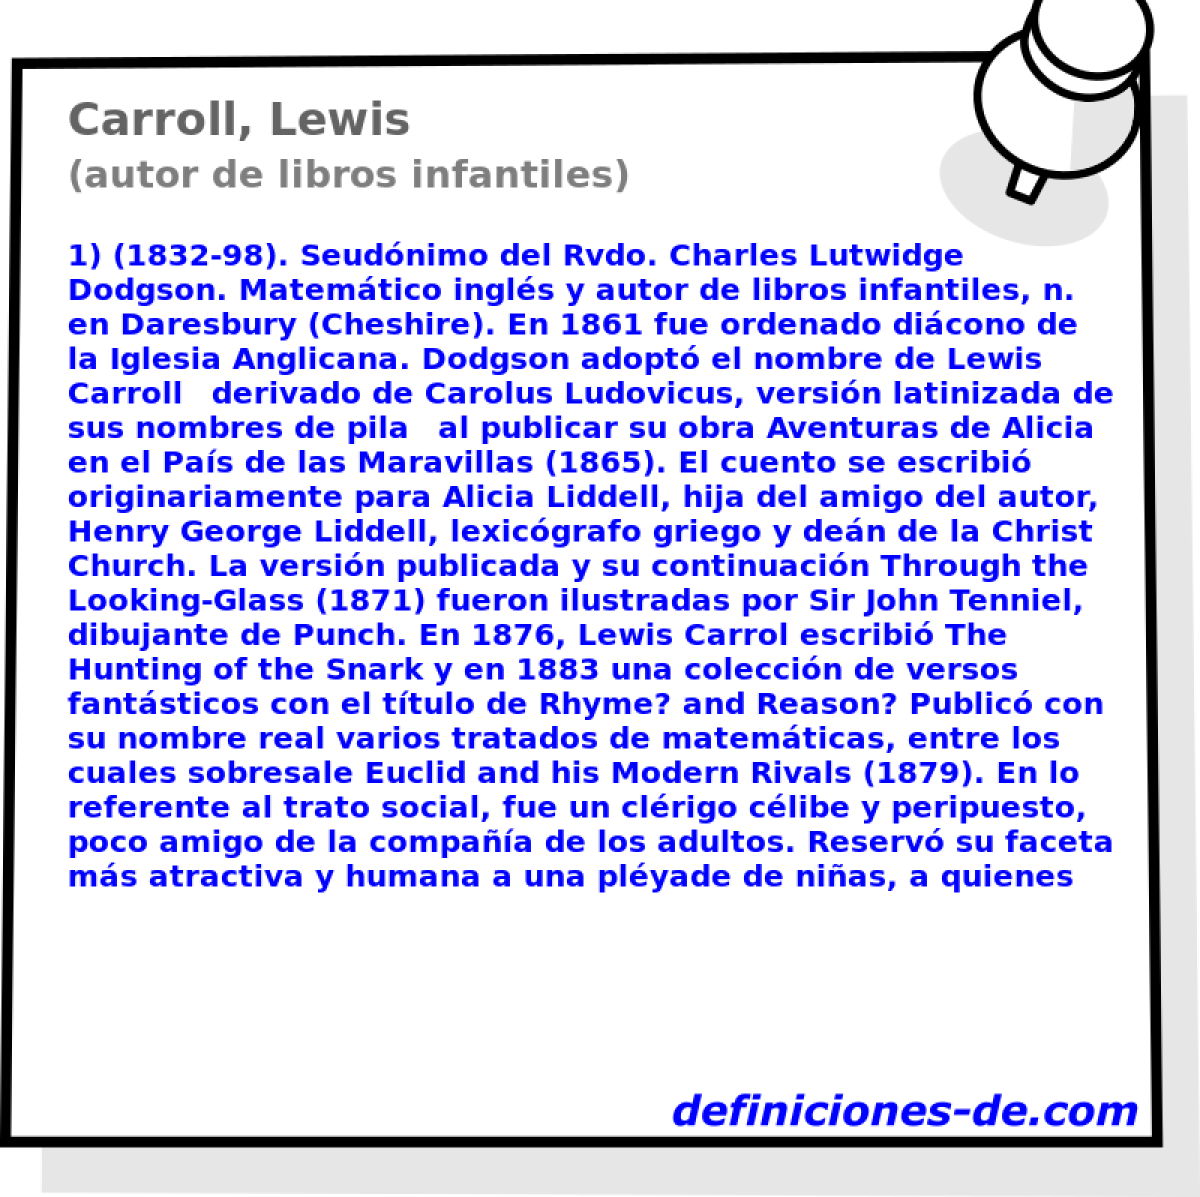 Carroll, Lewis (autor de libros infantiles)